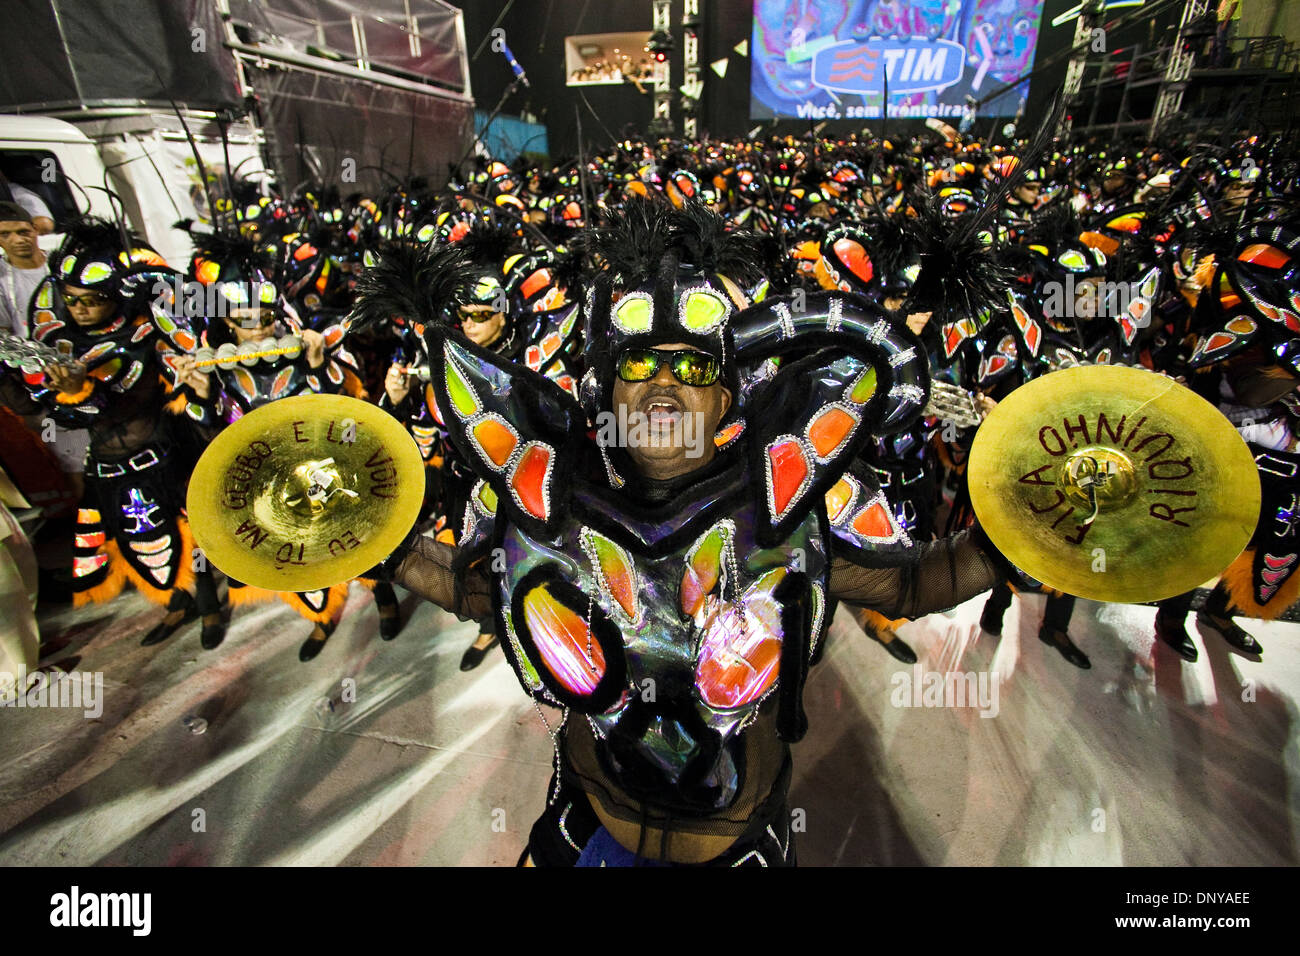 Parade der Sambaschulen, Karneval von Rio De Janeiro, Brasilien. Uniao da Ilha School 2011 Parade Trommeln Abschnitt Percussion-Instrumente Stockfoto